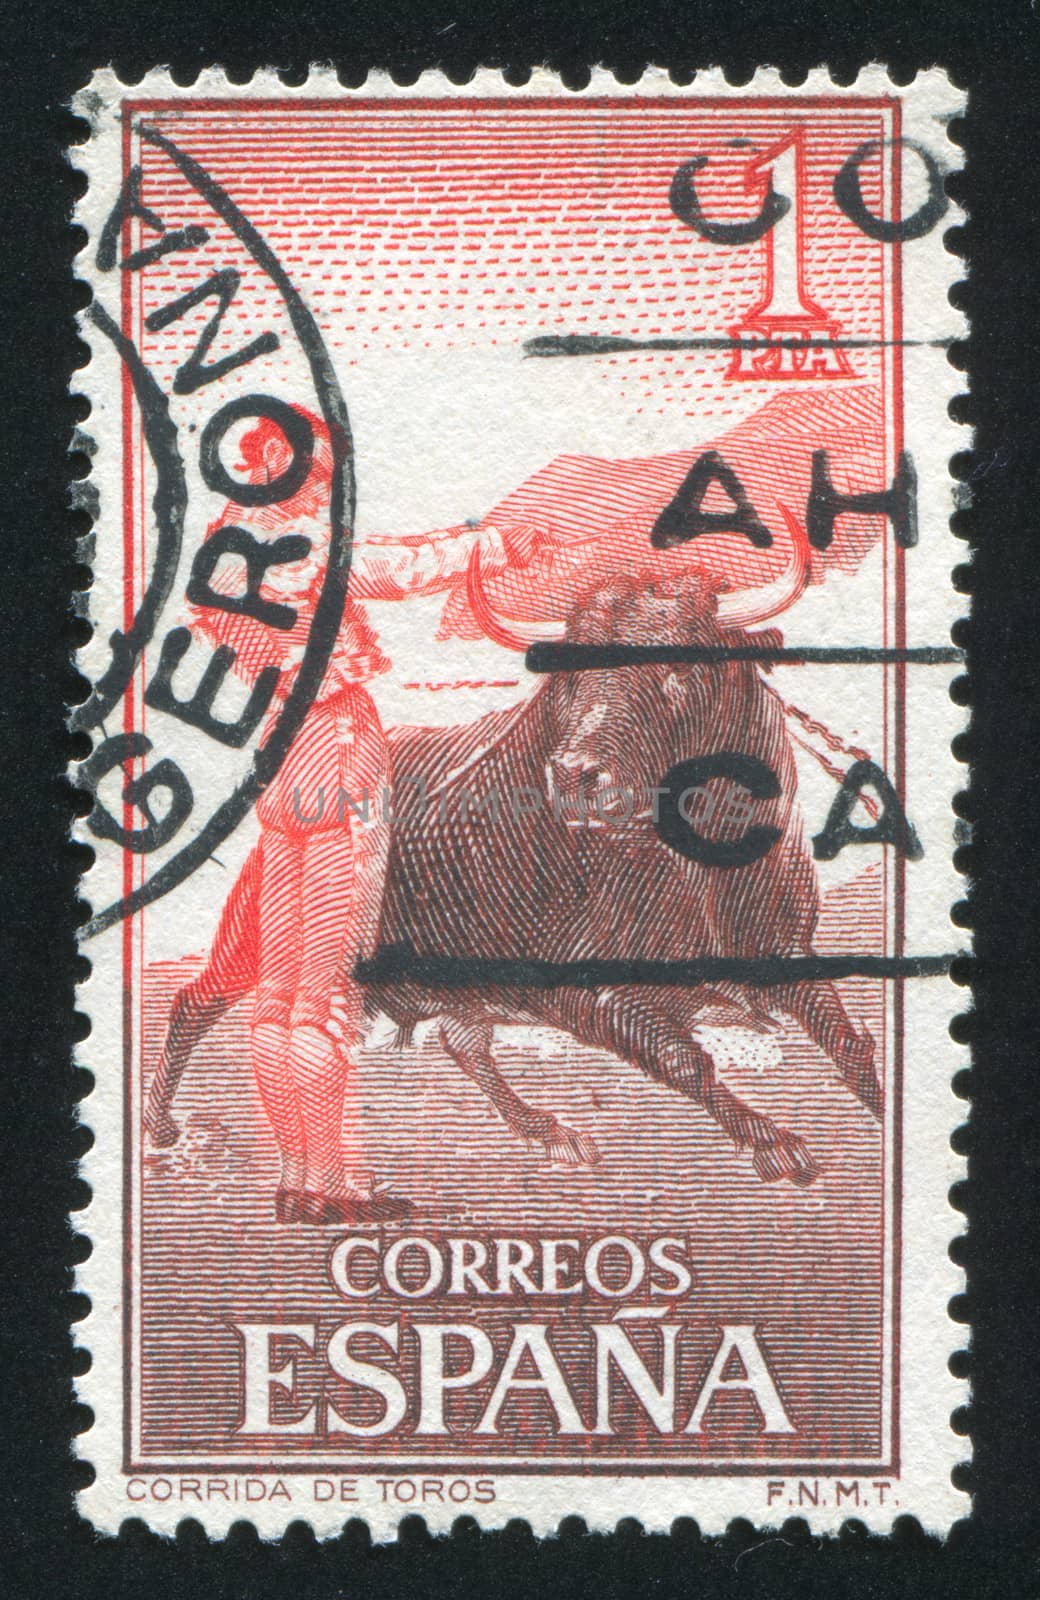 SPAIN - CIRCA 1960: stamp printed by Spain, shows Bullfighter, Corrida, circa 1960